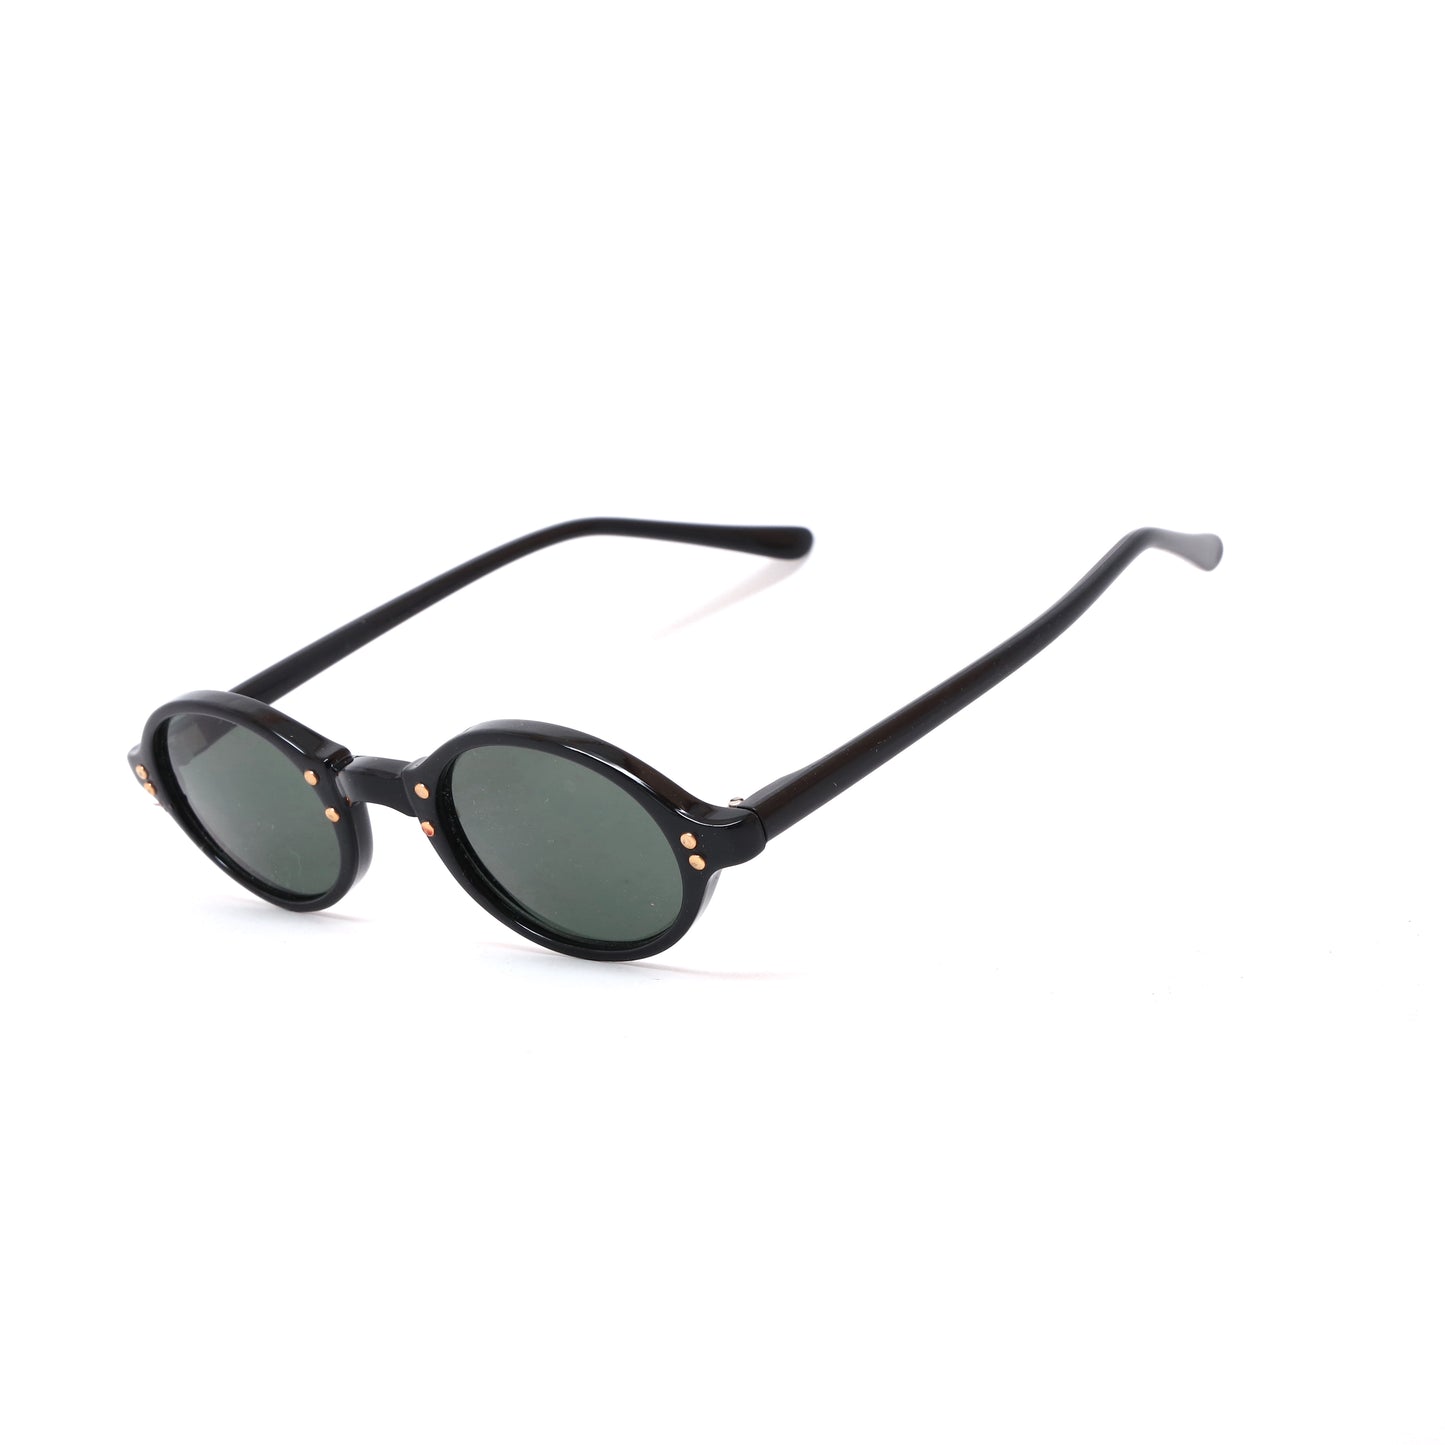 New Old Stock 1990s Alexine Slim Jet Black Oval Frame Sunglasses